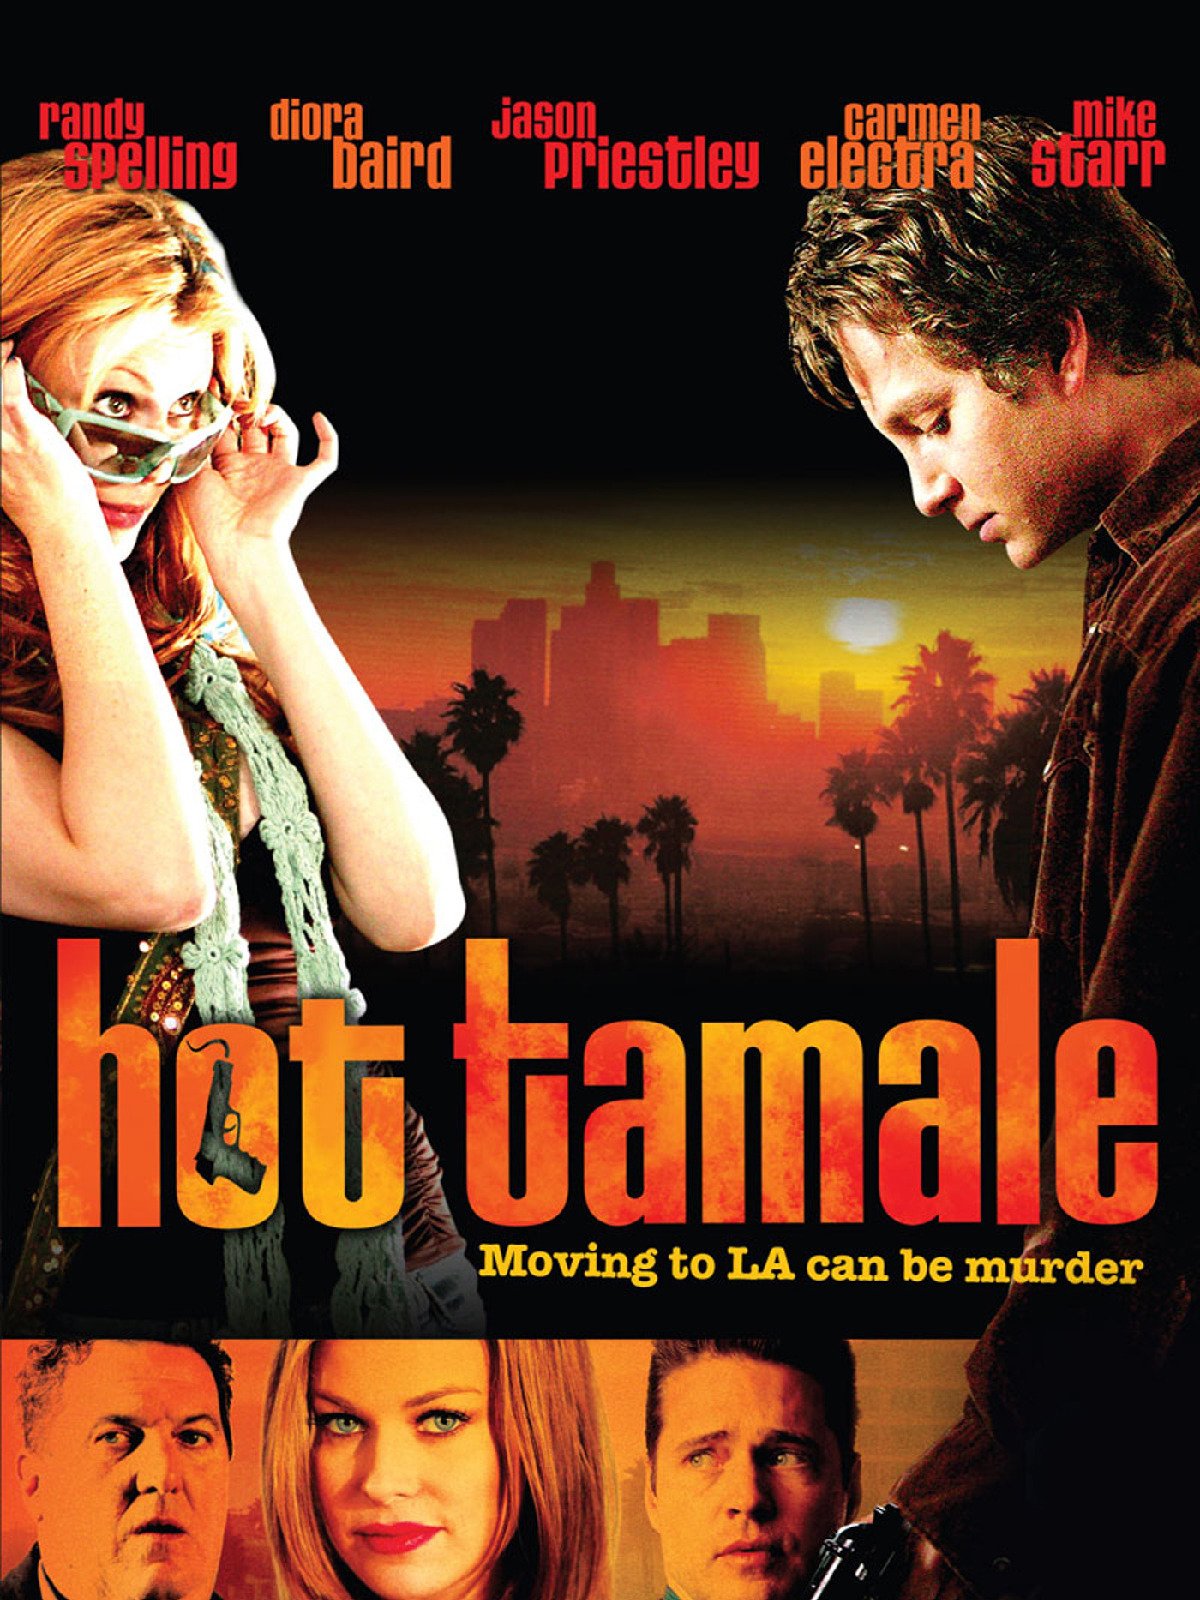 Hot tamale 2006